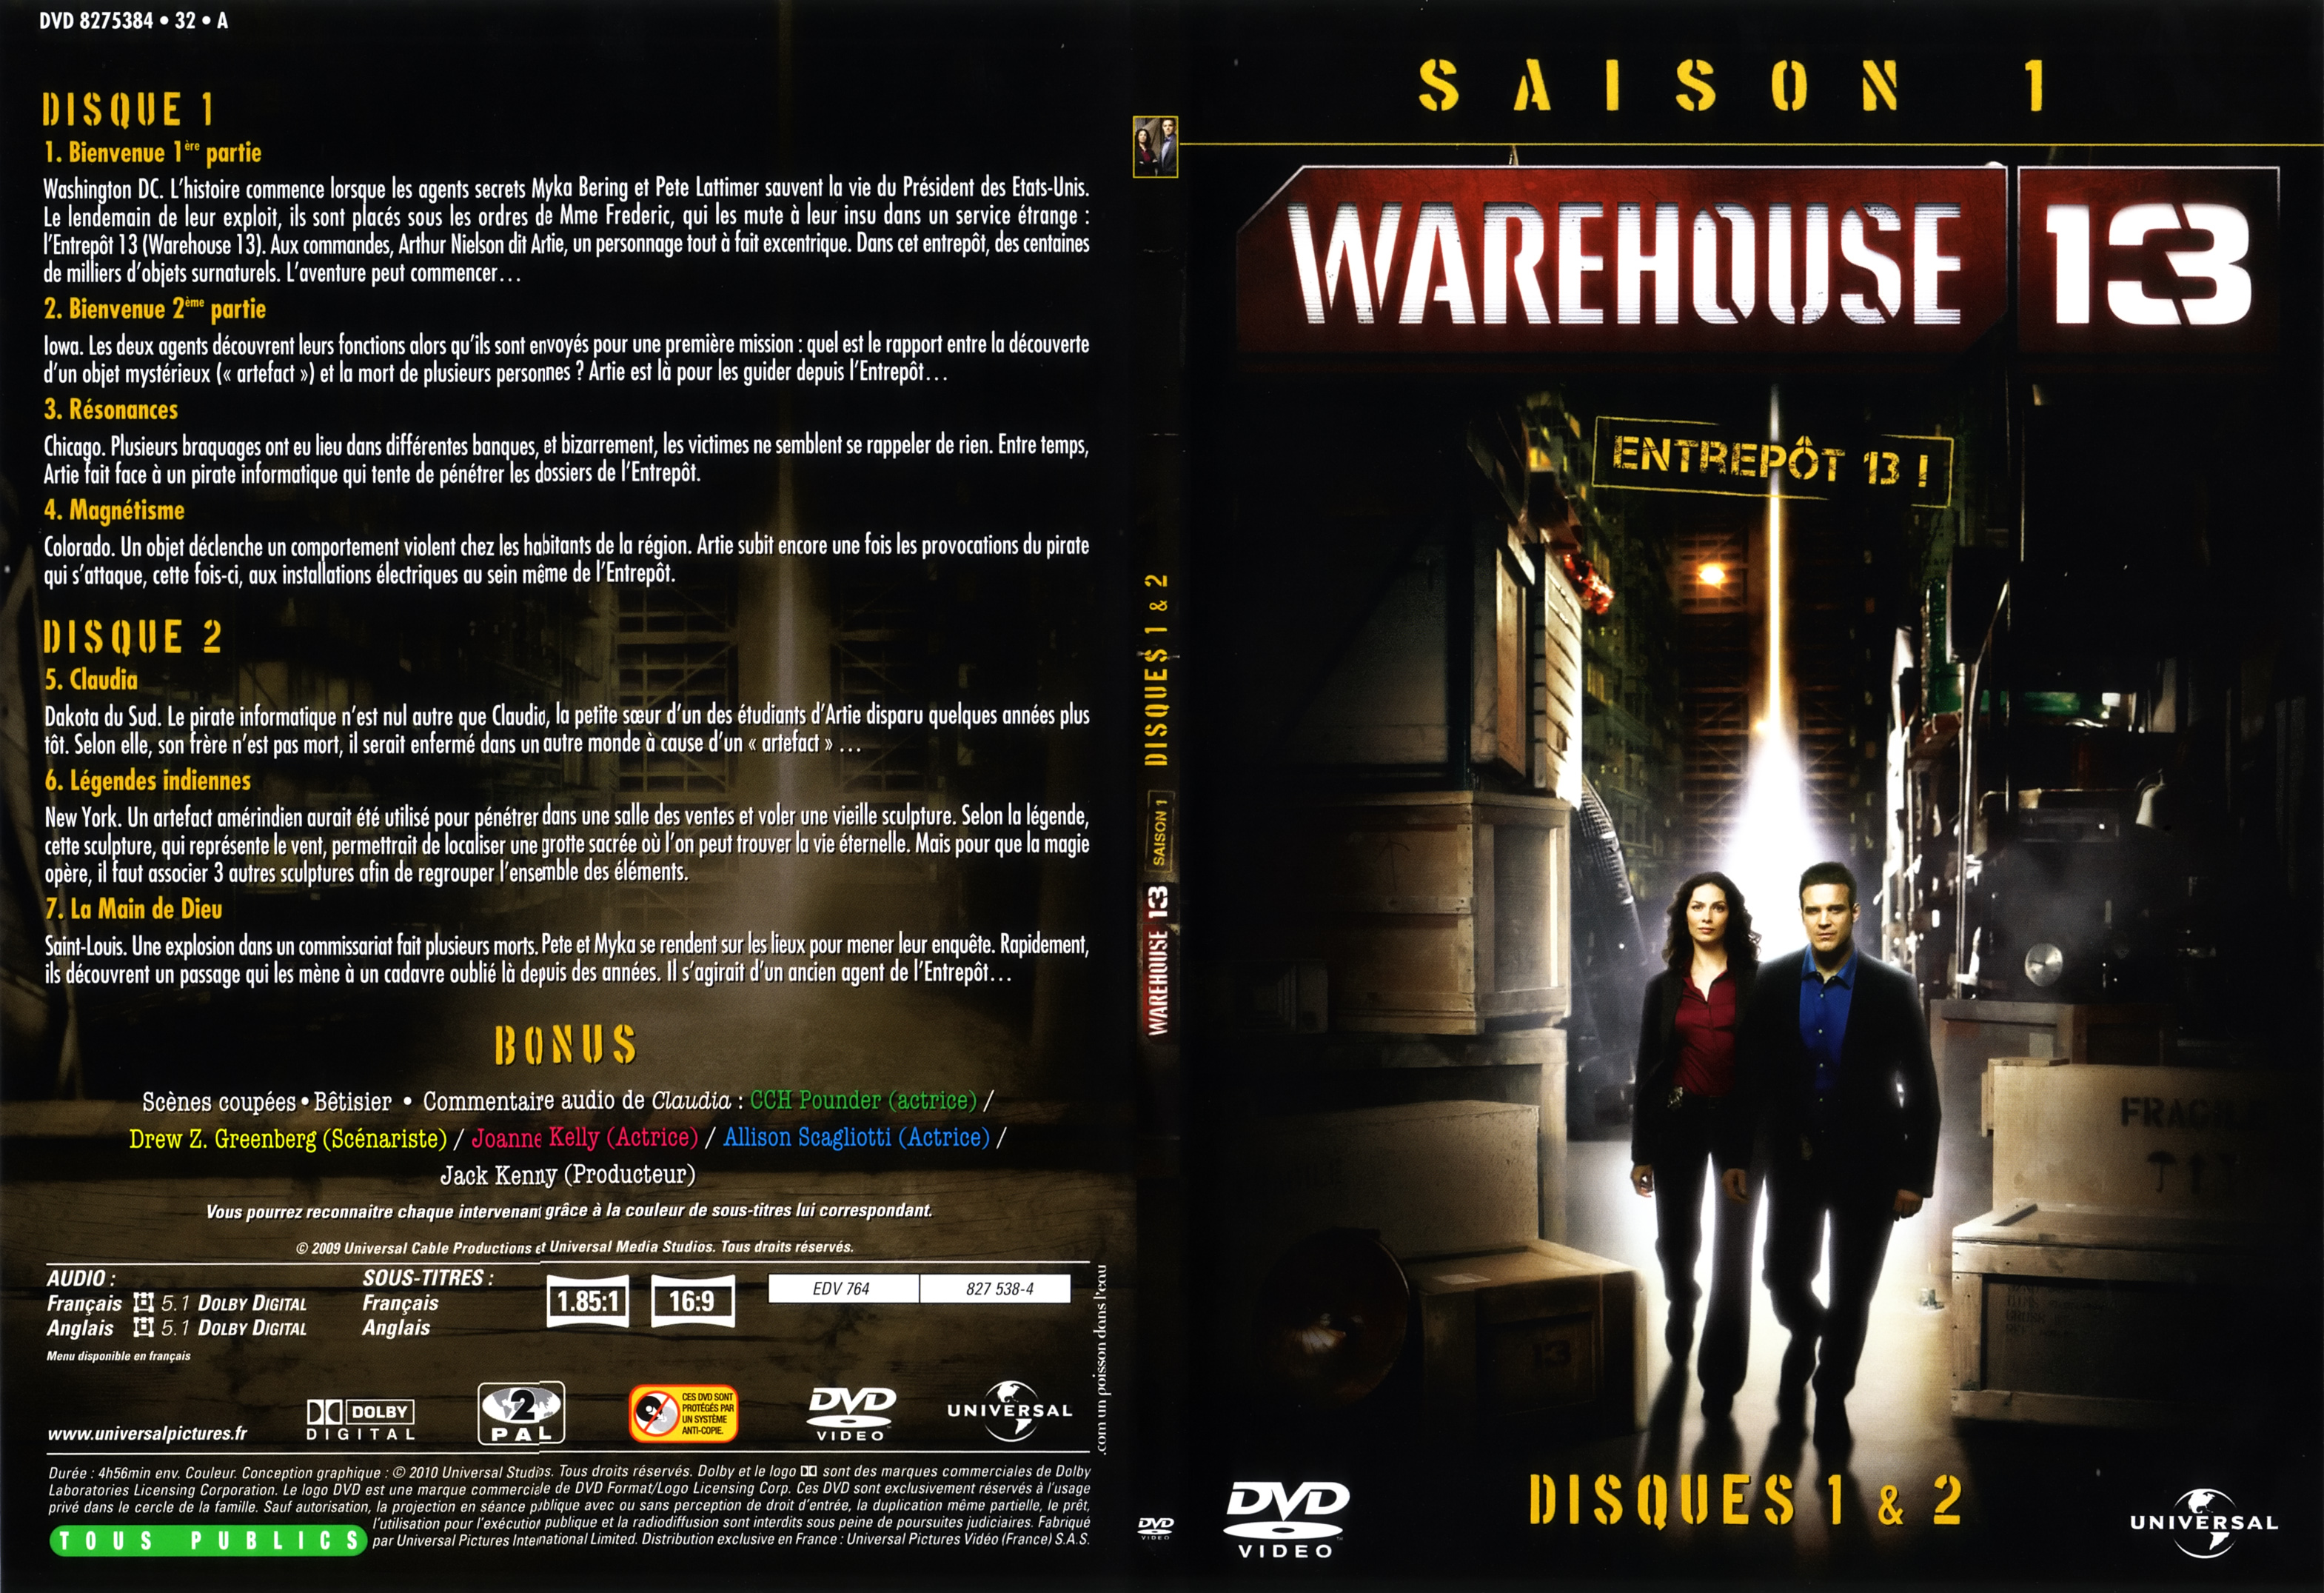 Jaquette DVD Warehouse 13 saison 1 DVD 1